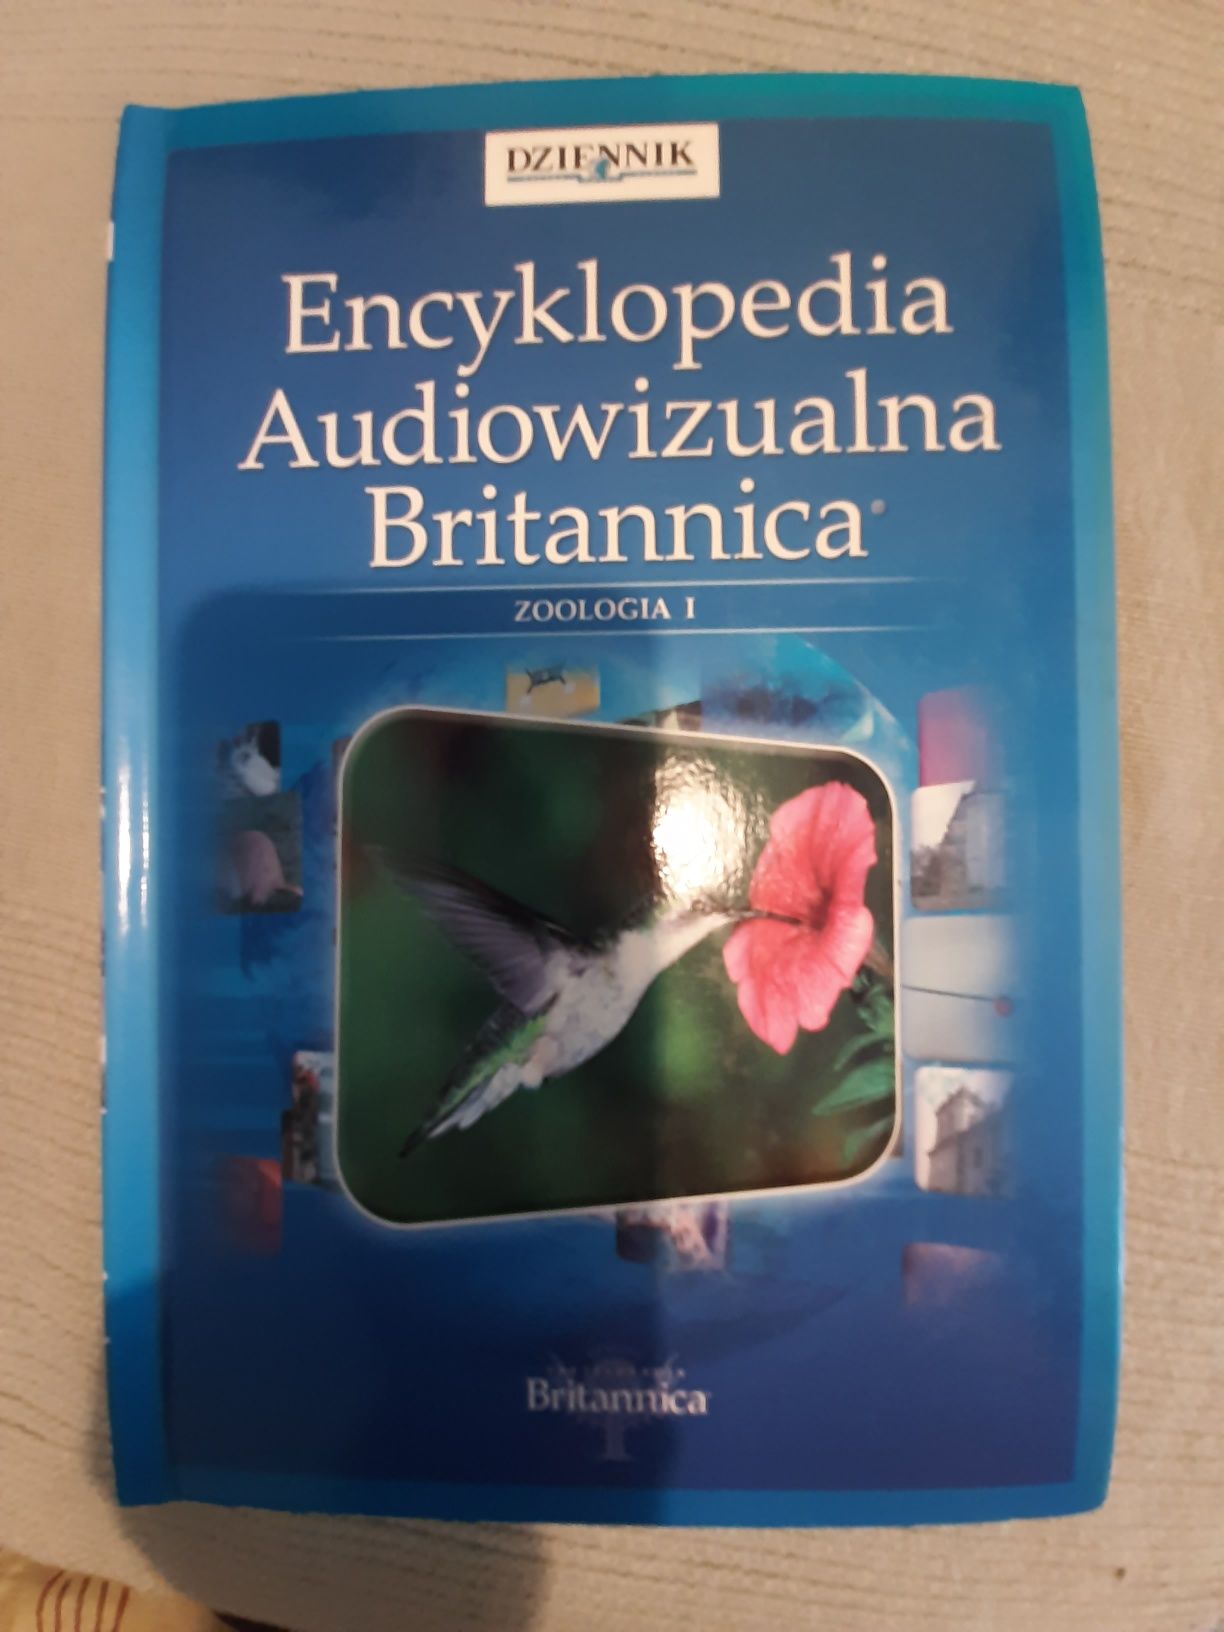 Encyklopedia Audiowizualna Brittannica (Zoologia 1) (P3HG)